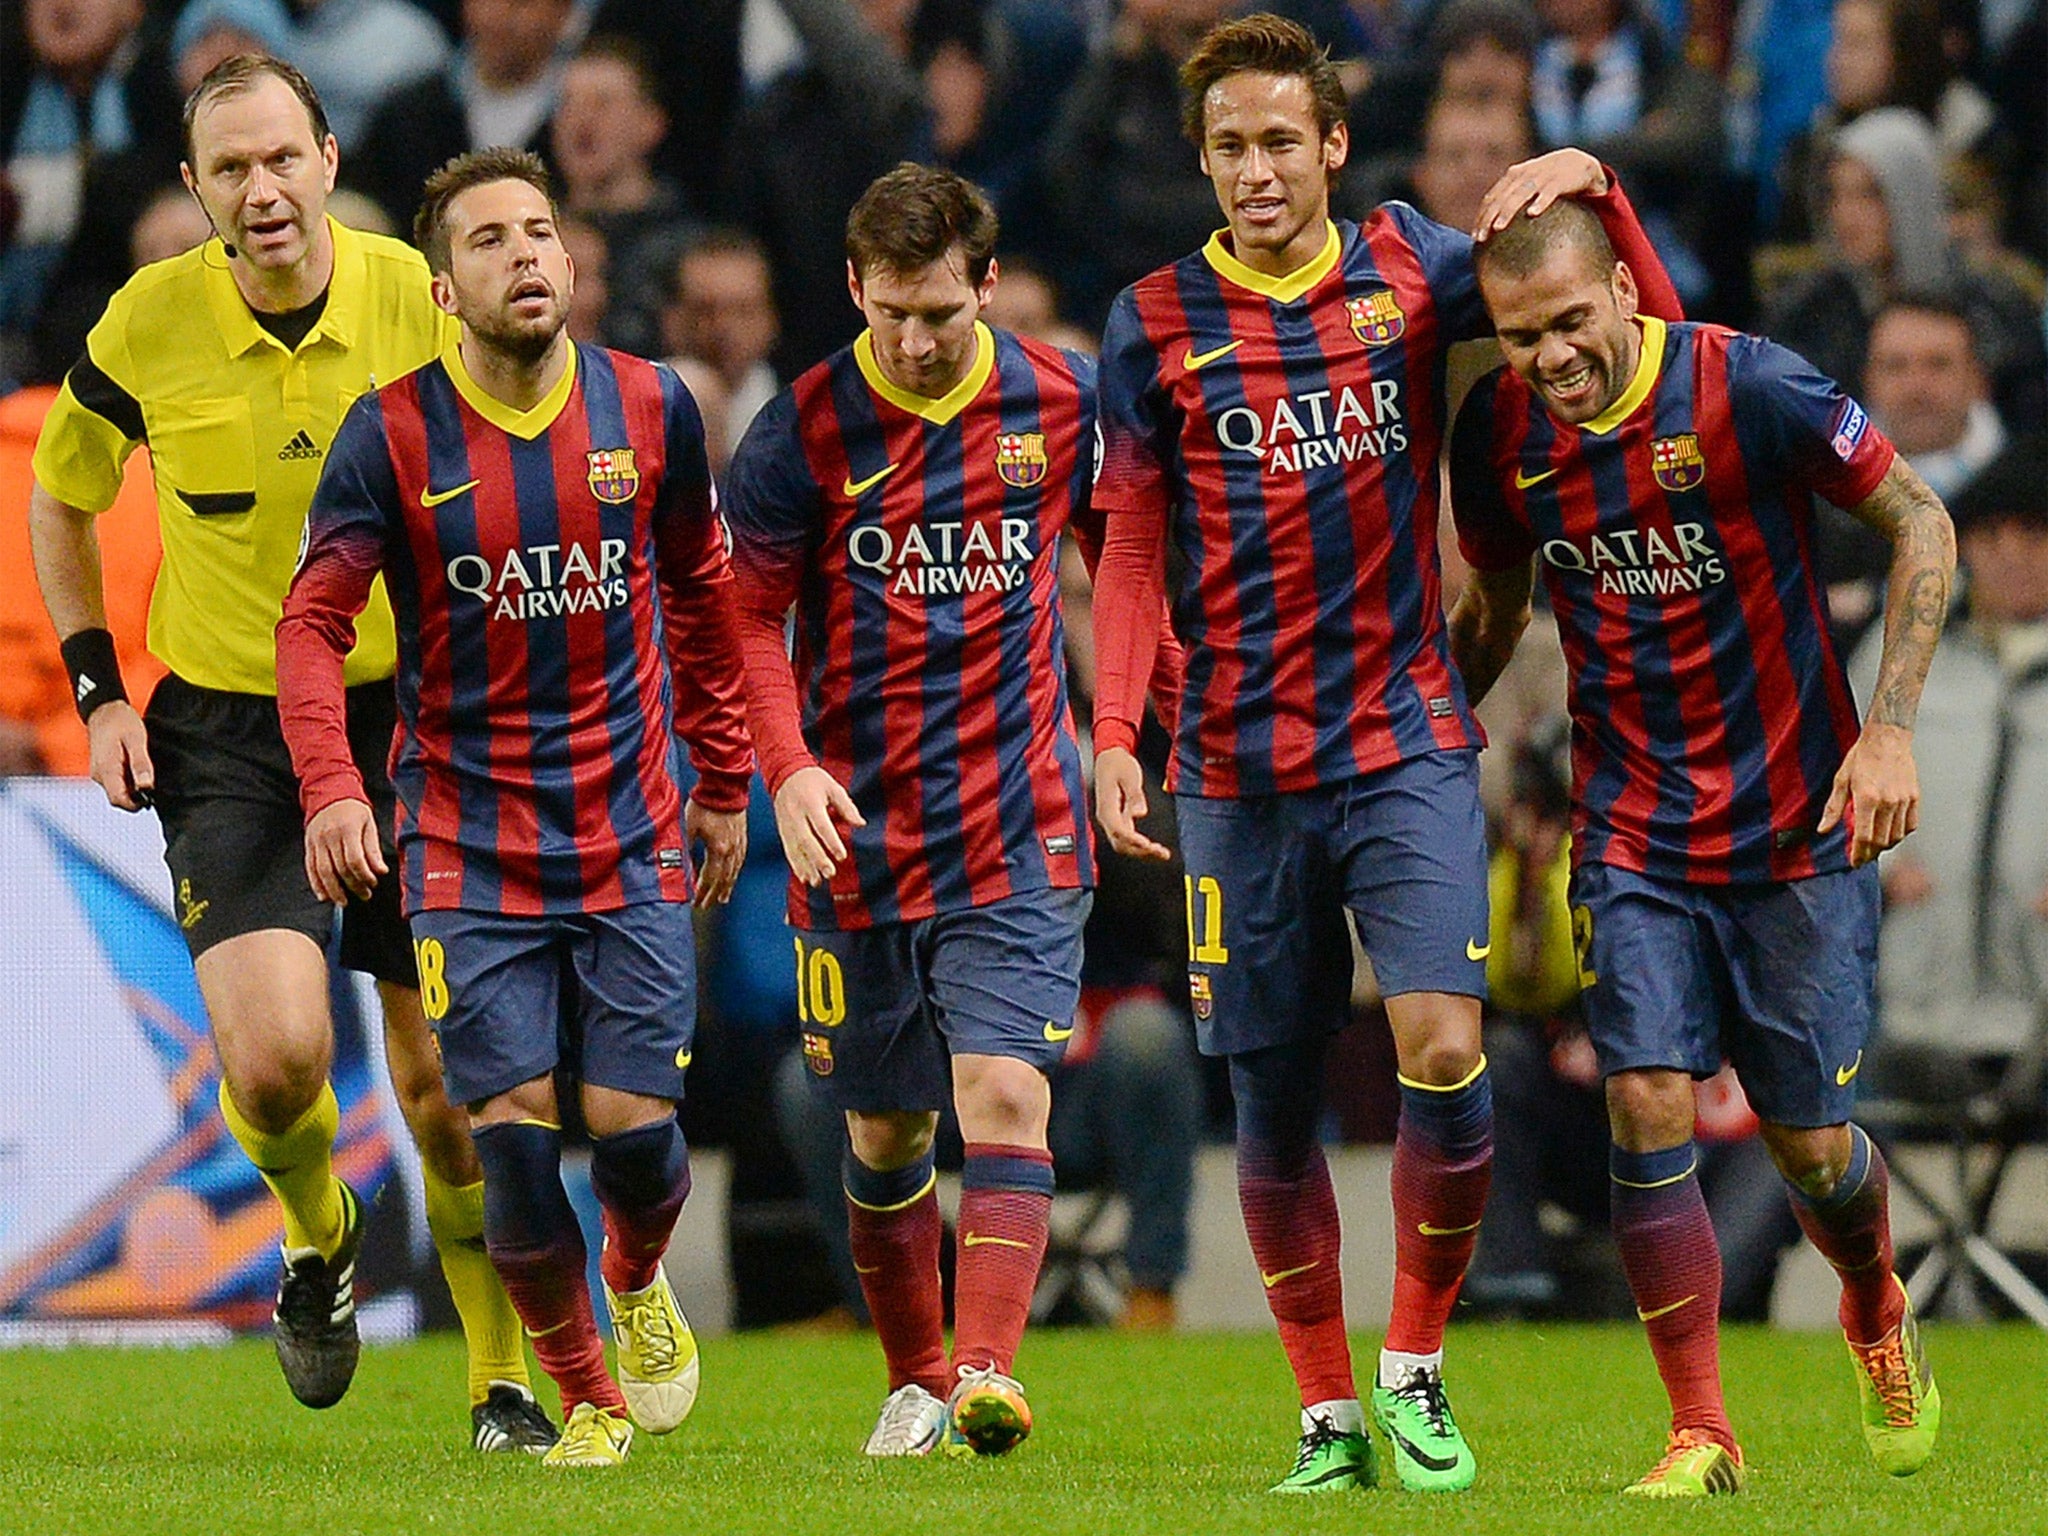 Manchester City vs. Barcelona, 2014 UEFA Champions League